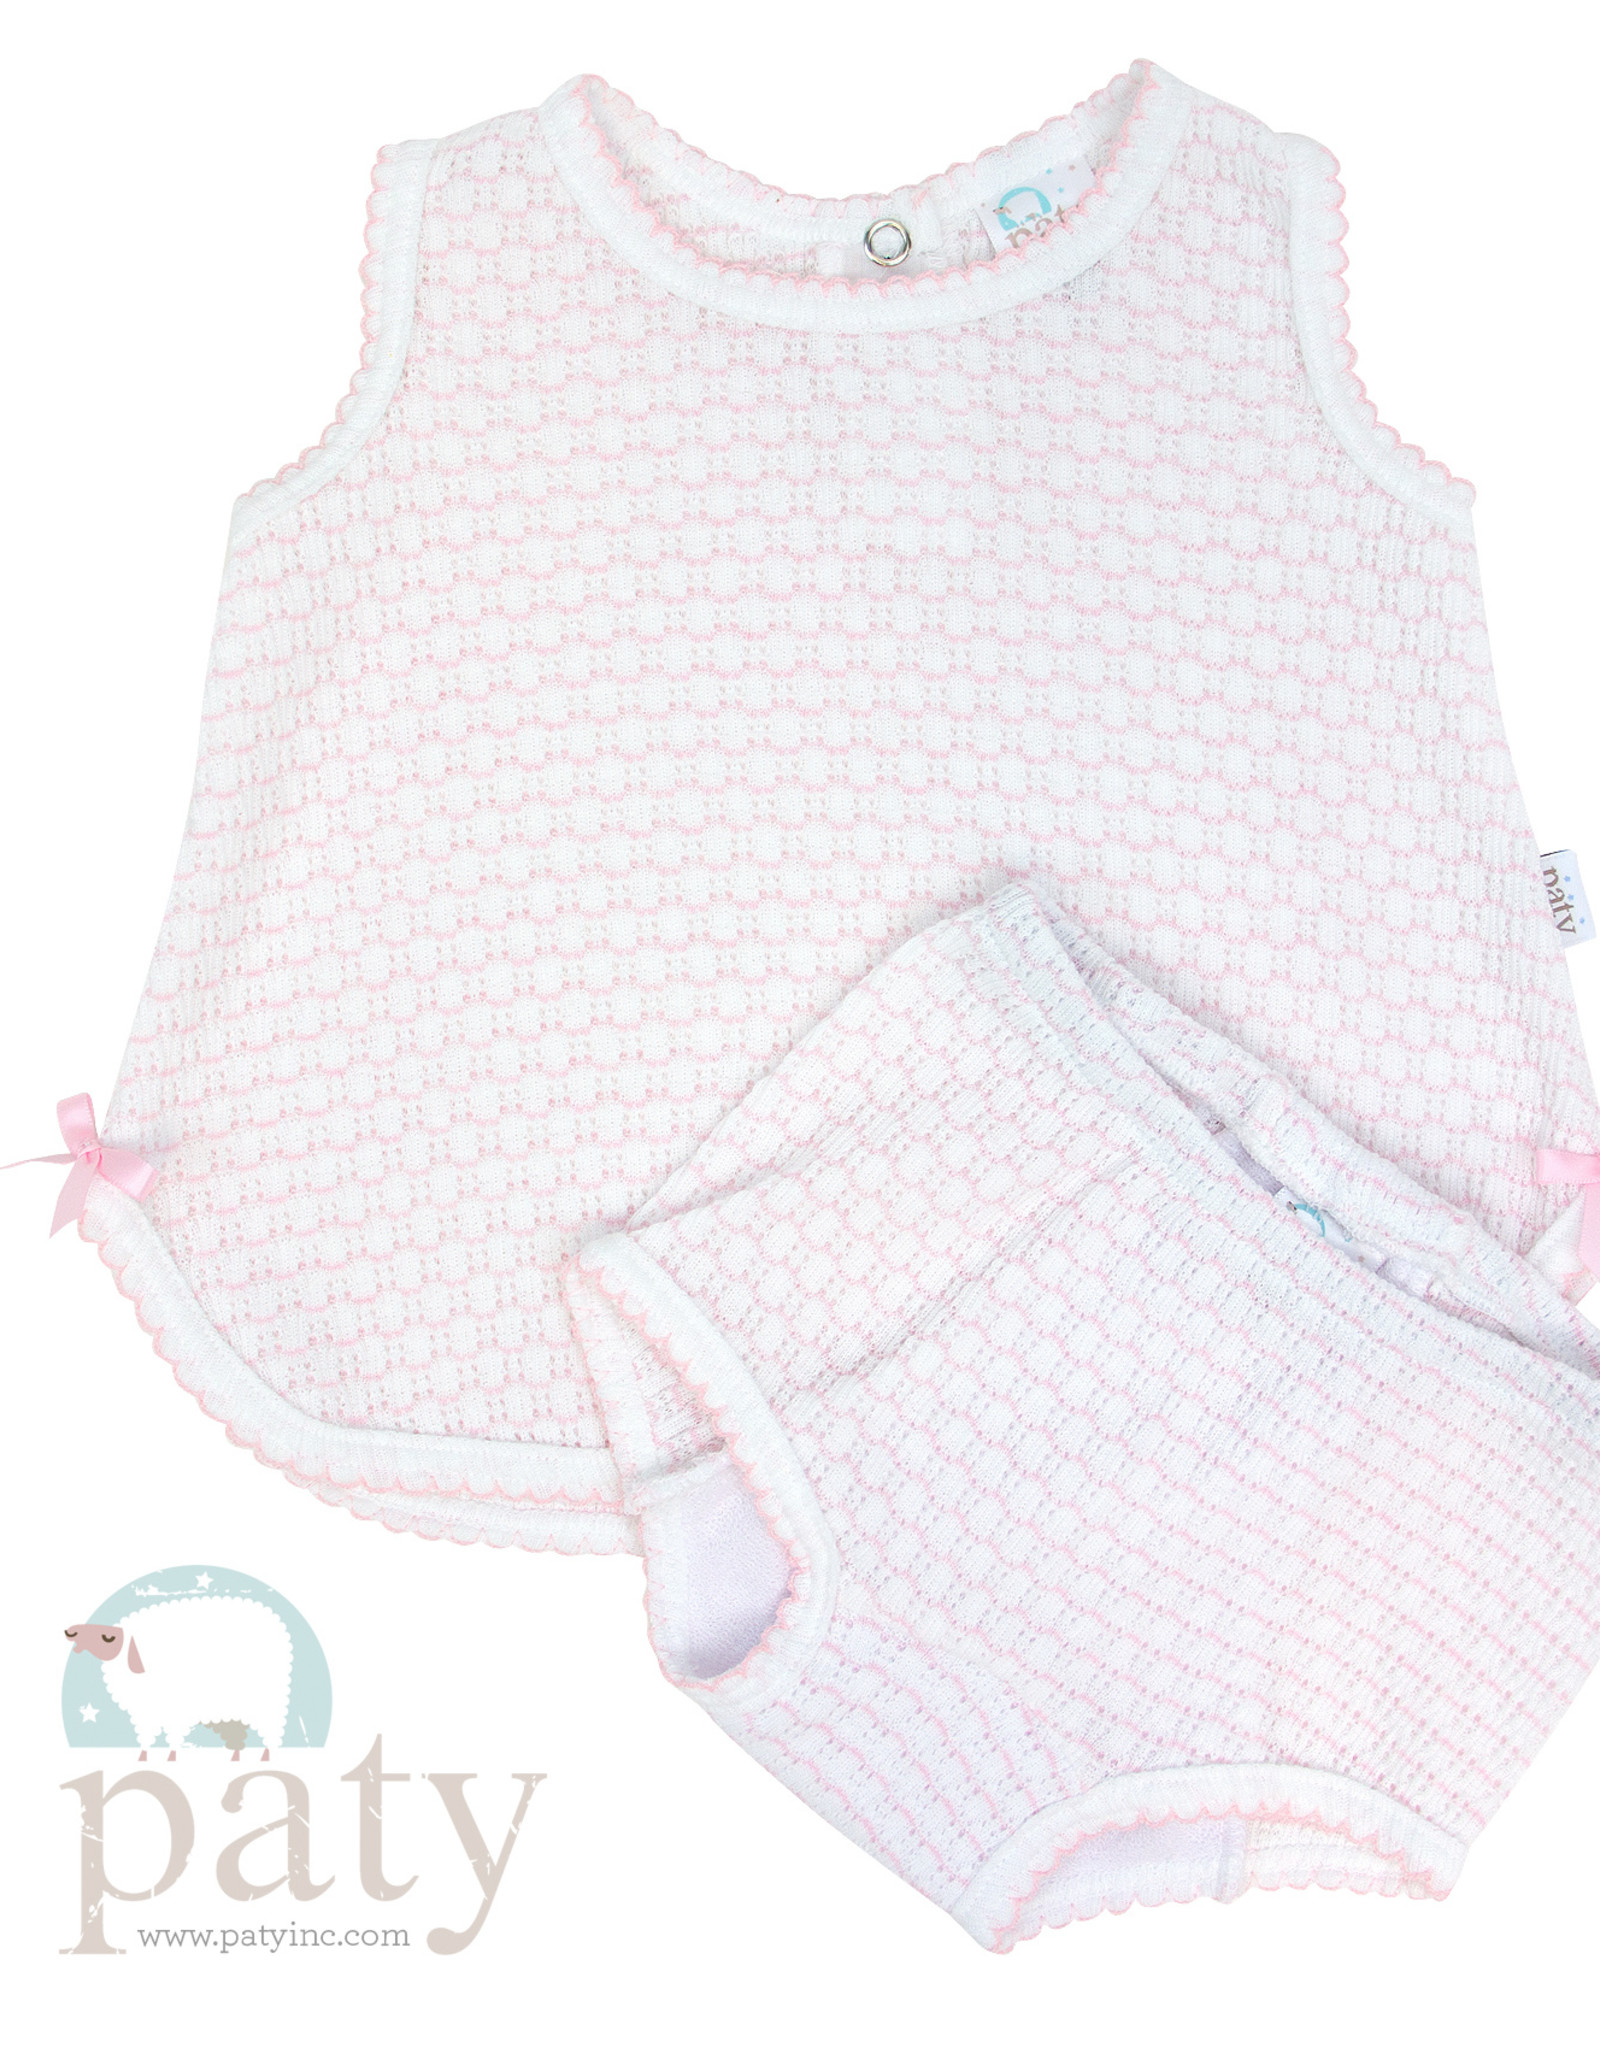 Paty, Inc. 336 Diaper Set Pink